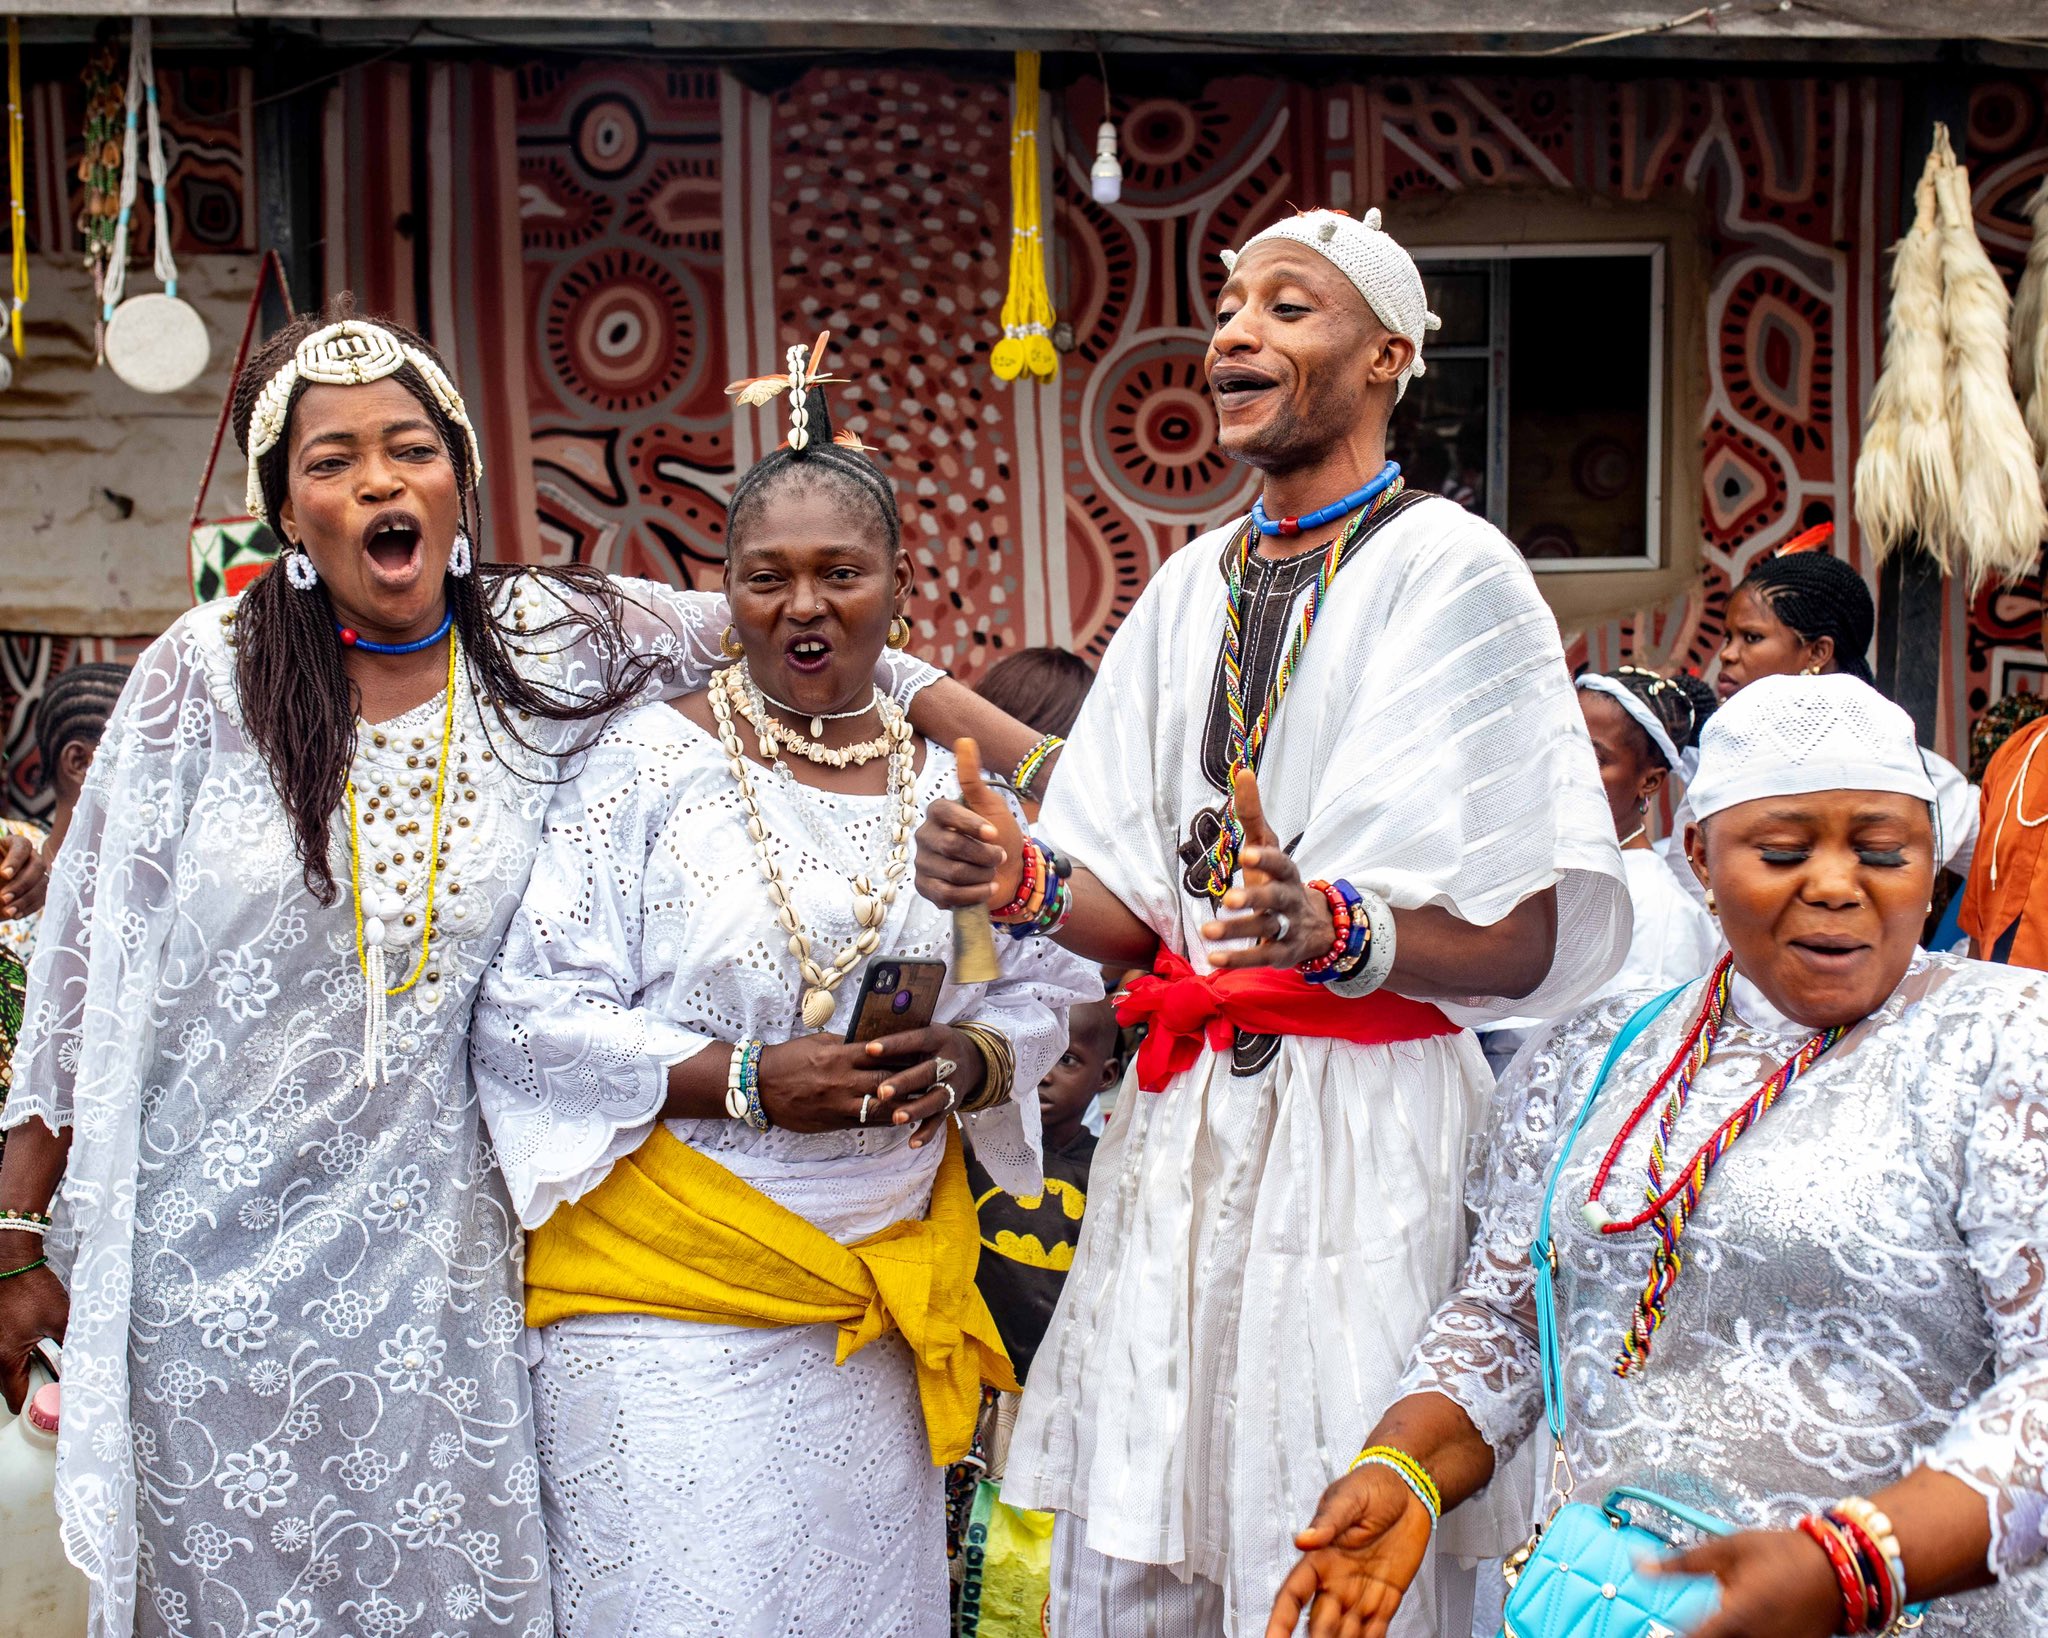 THE OSUN-OSHOGBO FESTIVAL IN NIGERIA